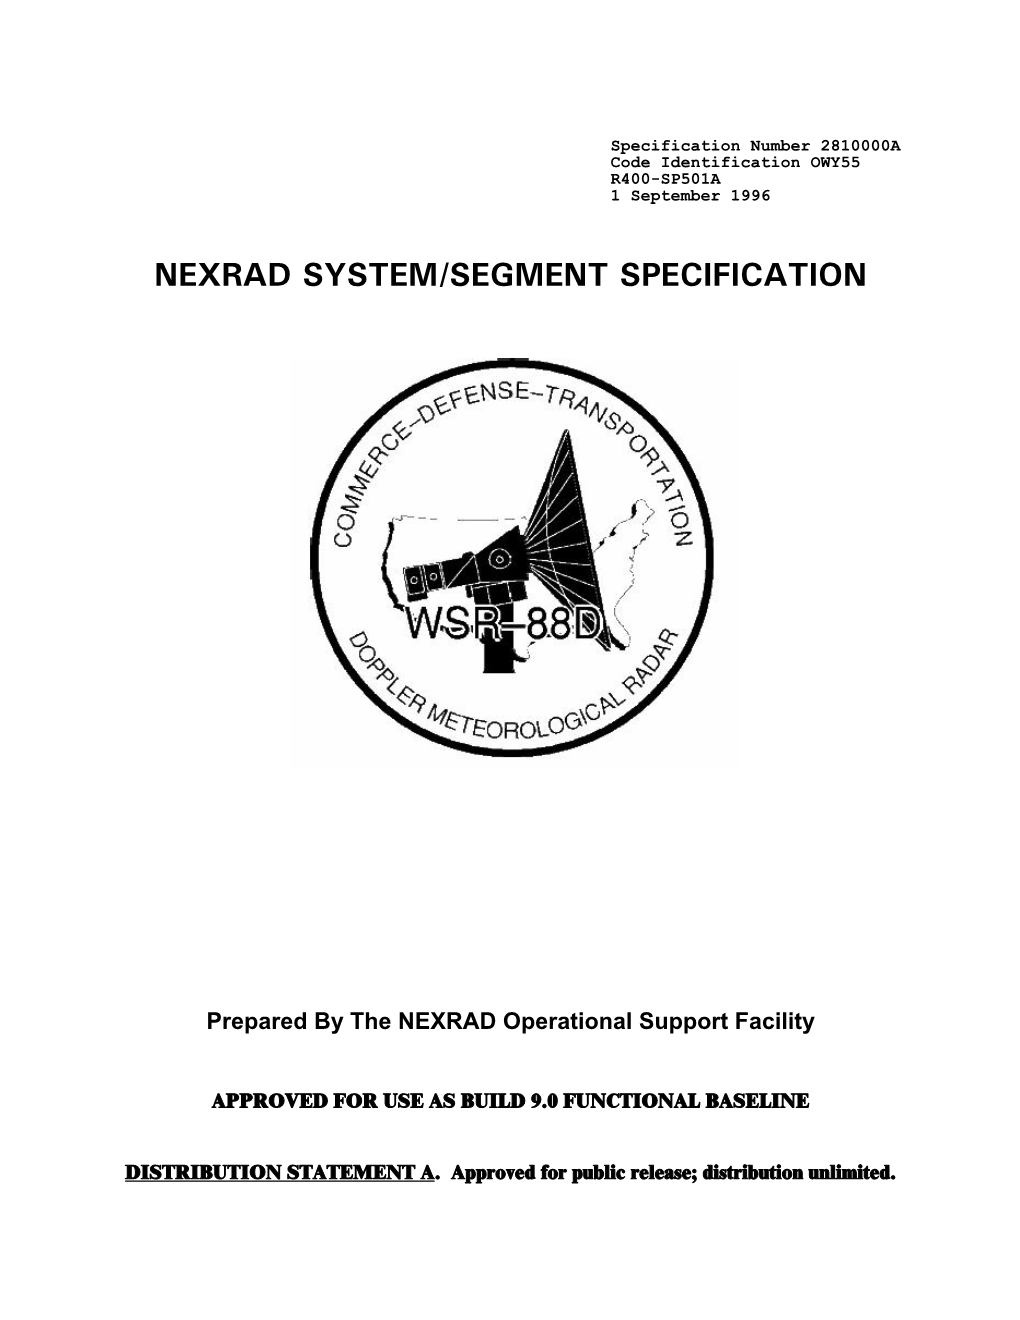 Nexrad System/Segment Specification (Ntr) 1996